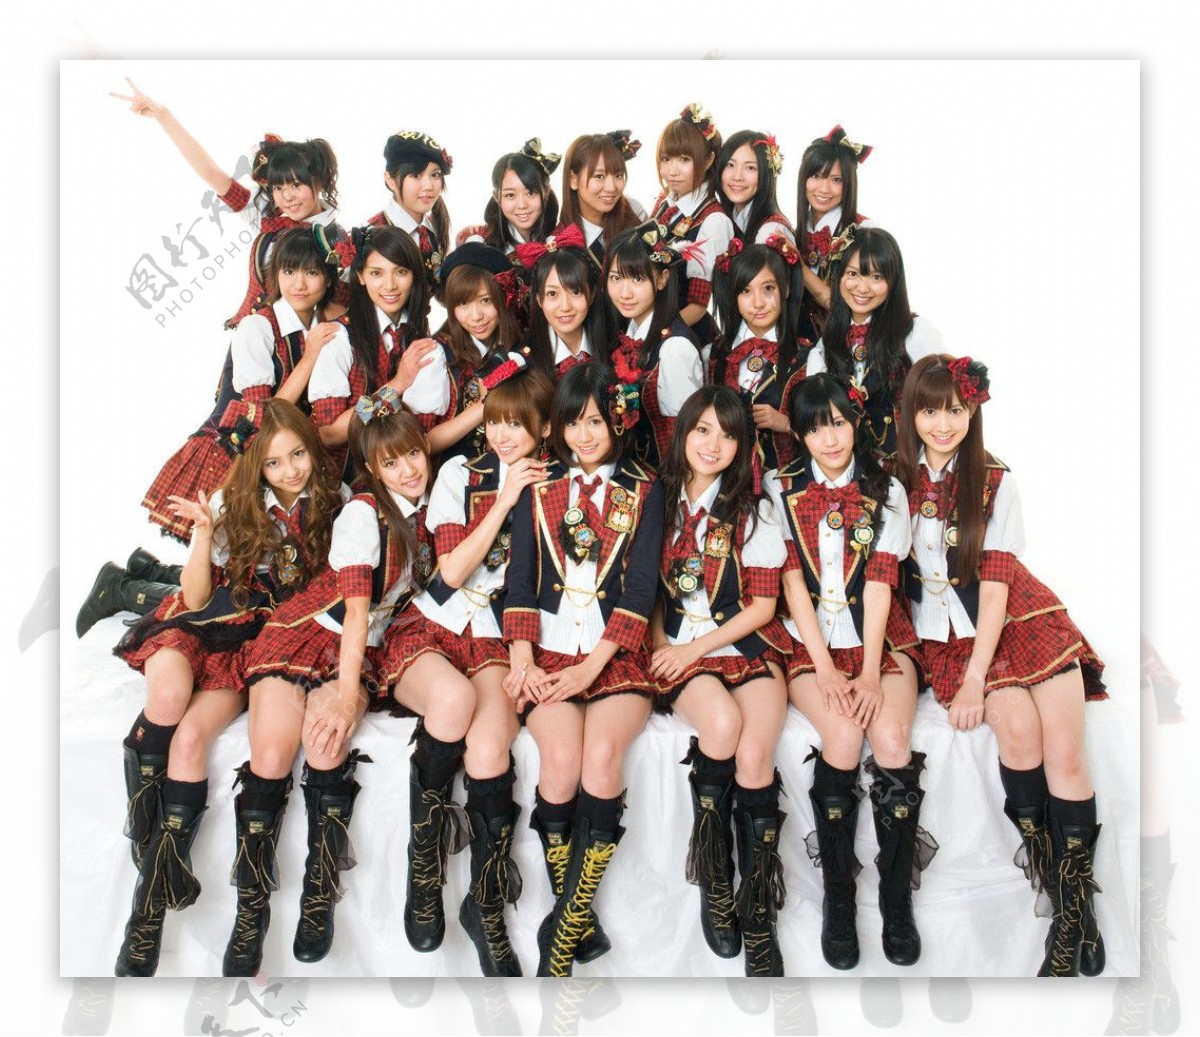 AKB48宣传图图片